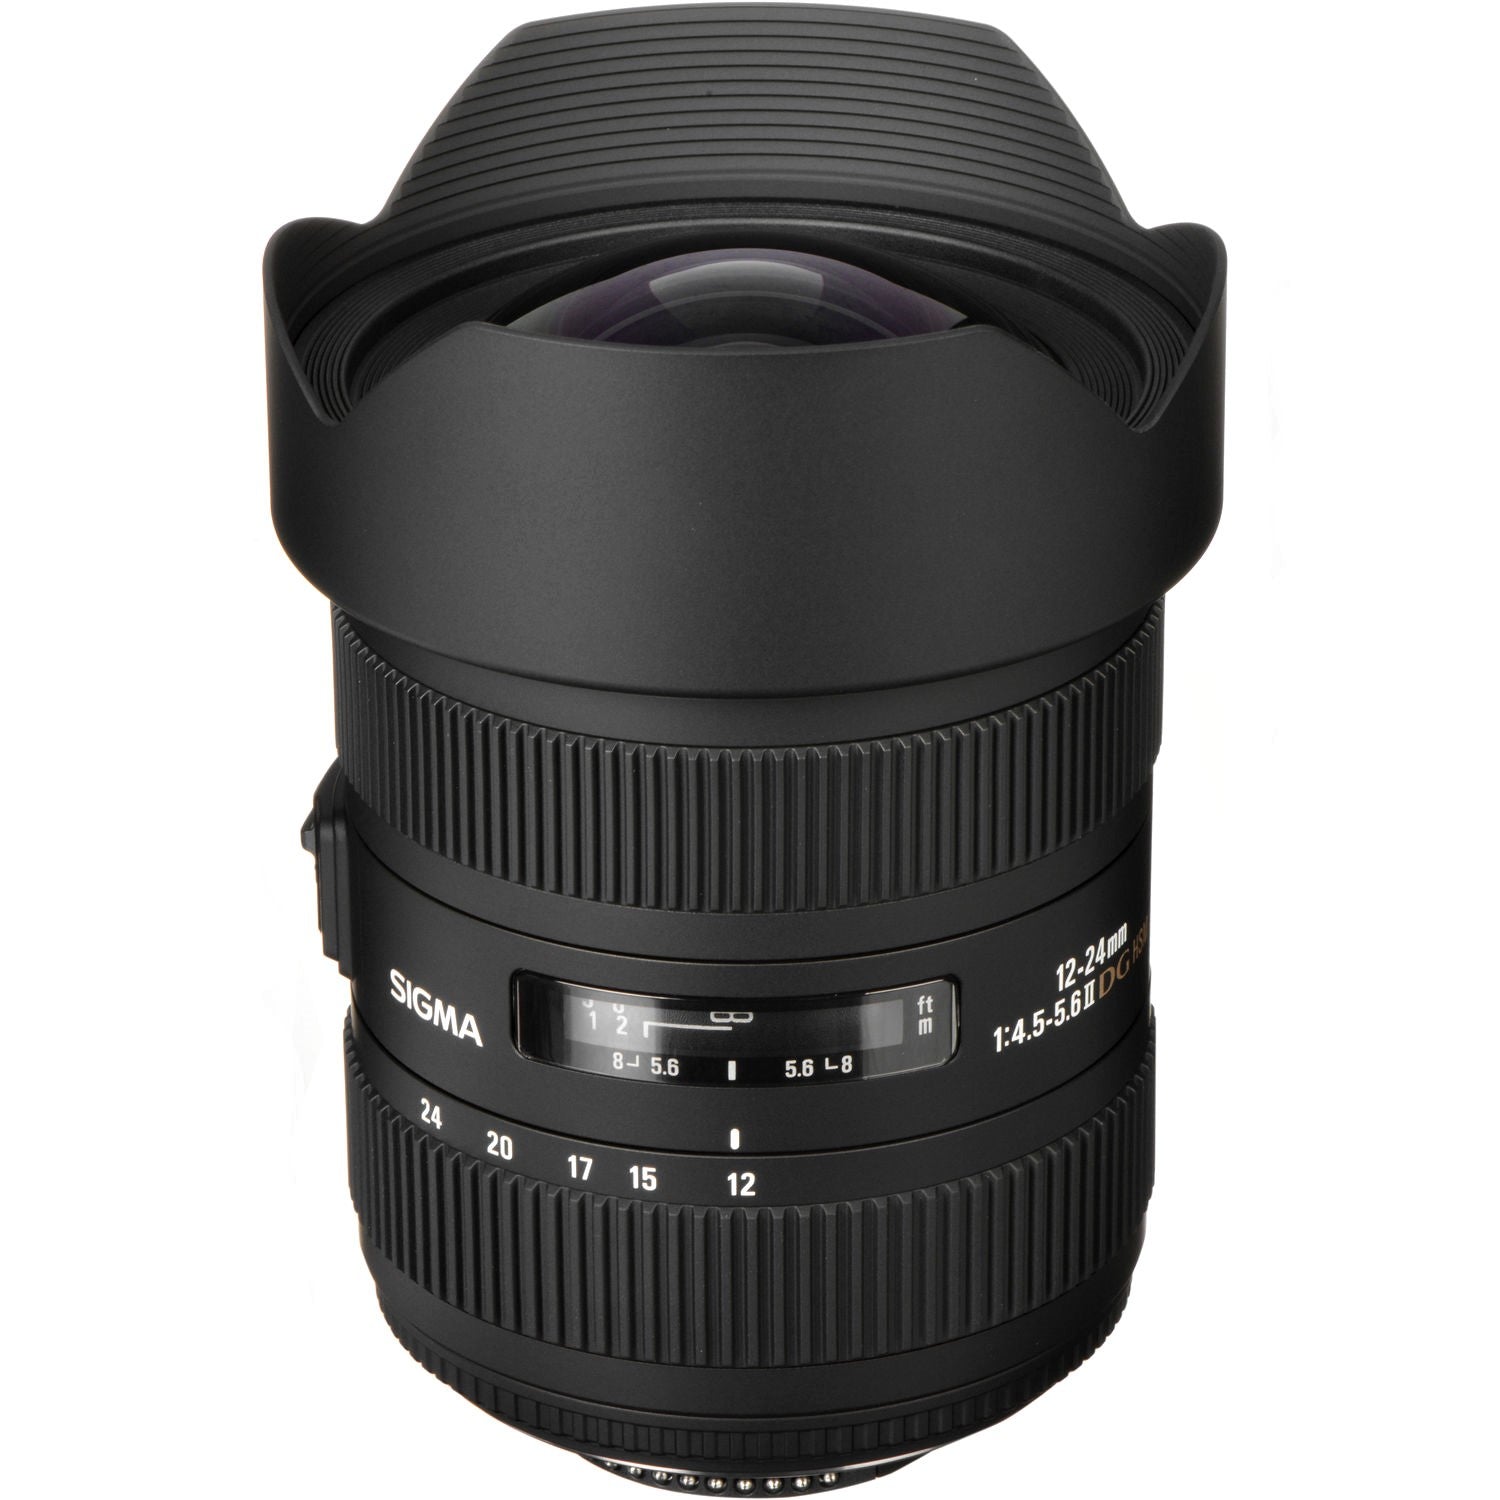 Sigma 12-24mm F4.5-5.6 II EX DG ASP-HSM Lens for Nikon